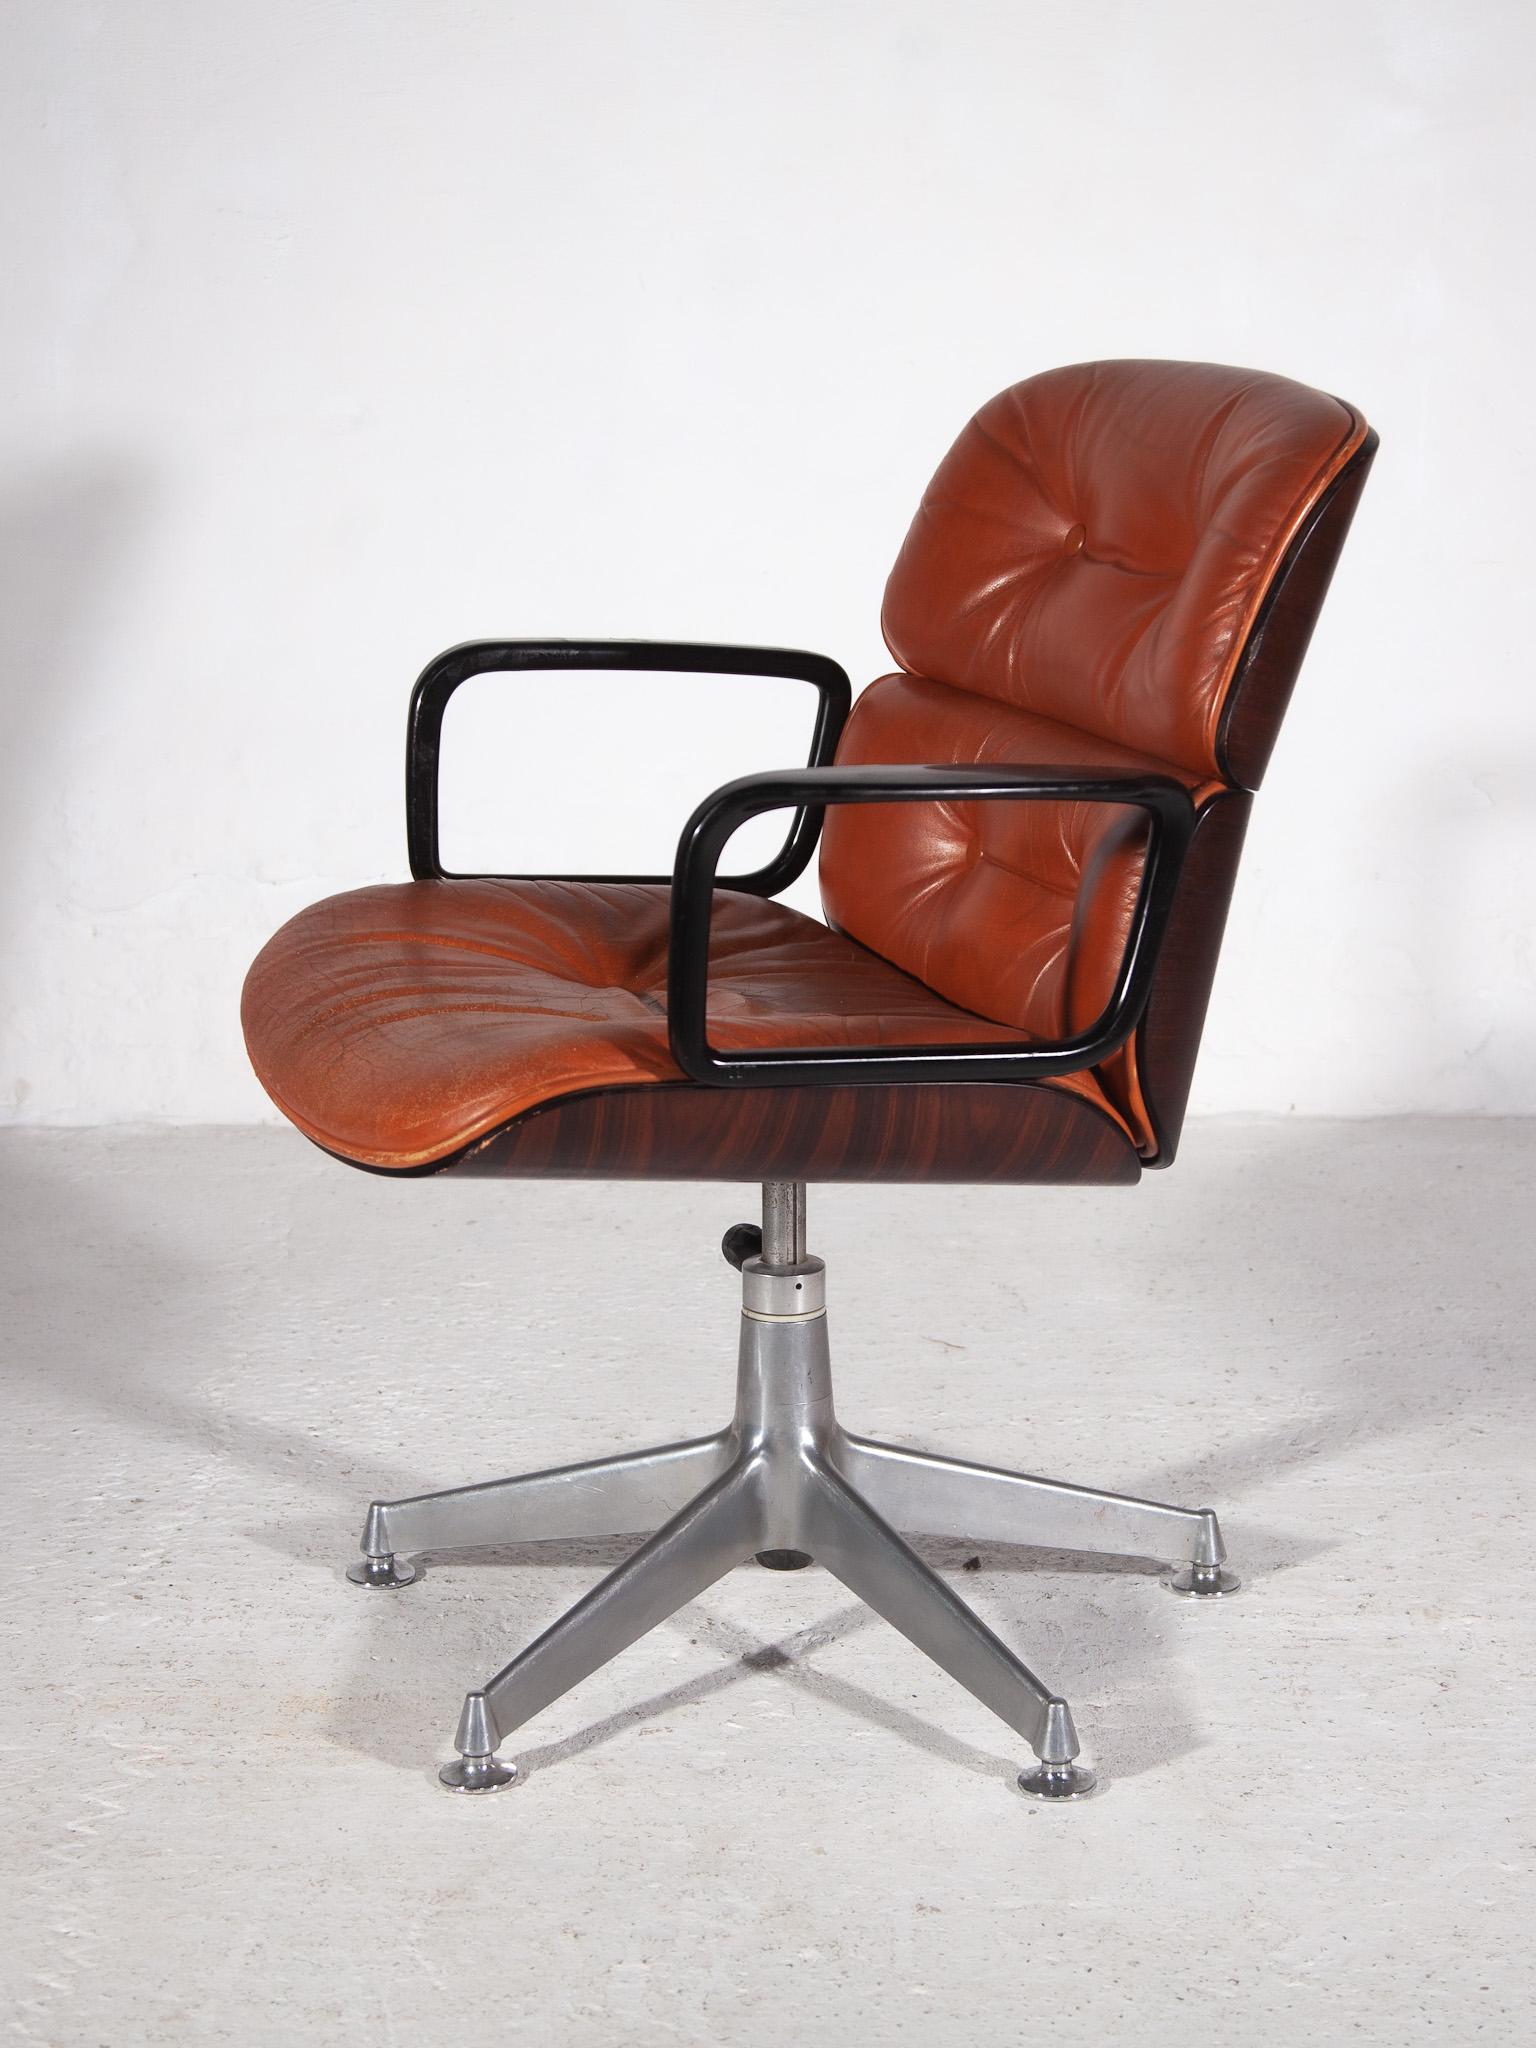 Hand-Crafted Rare Executive Arm Desk Chair for Mobli Italiani Moderni, Rome